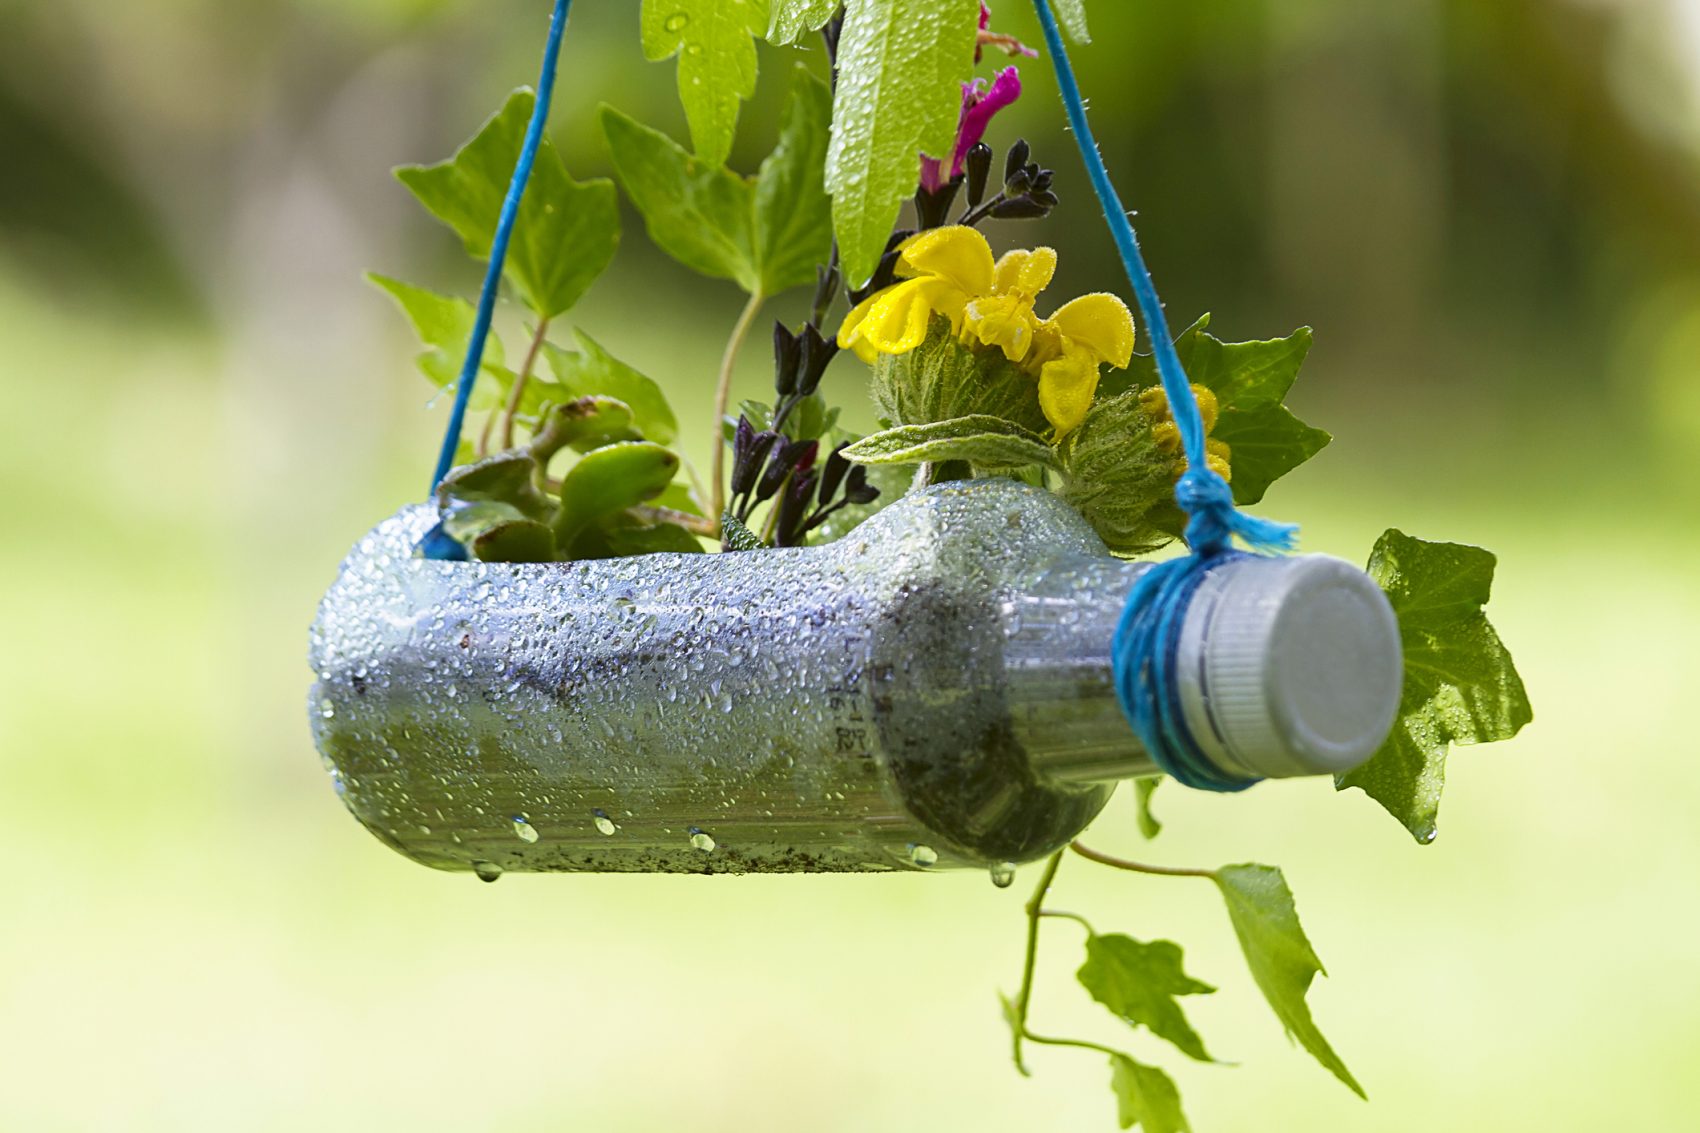 Upcycled plastic bottle plant pot | World of Better Learning ...